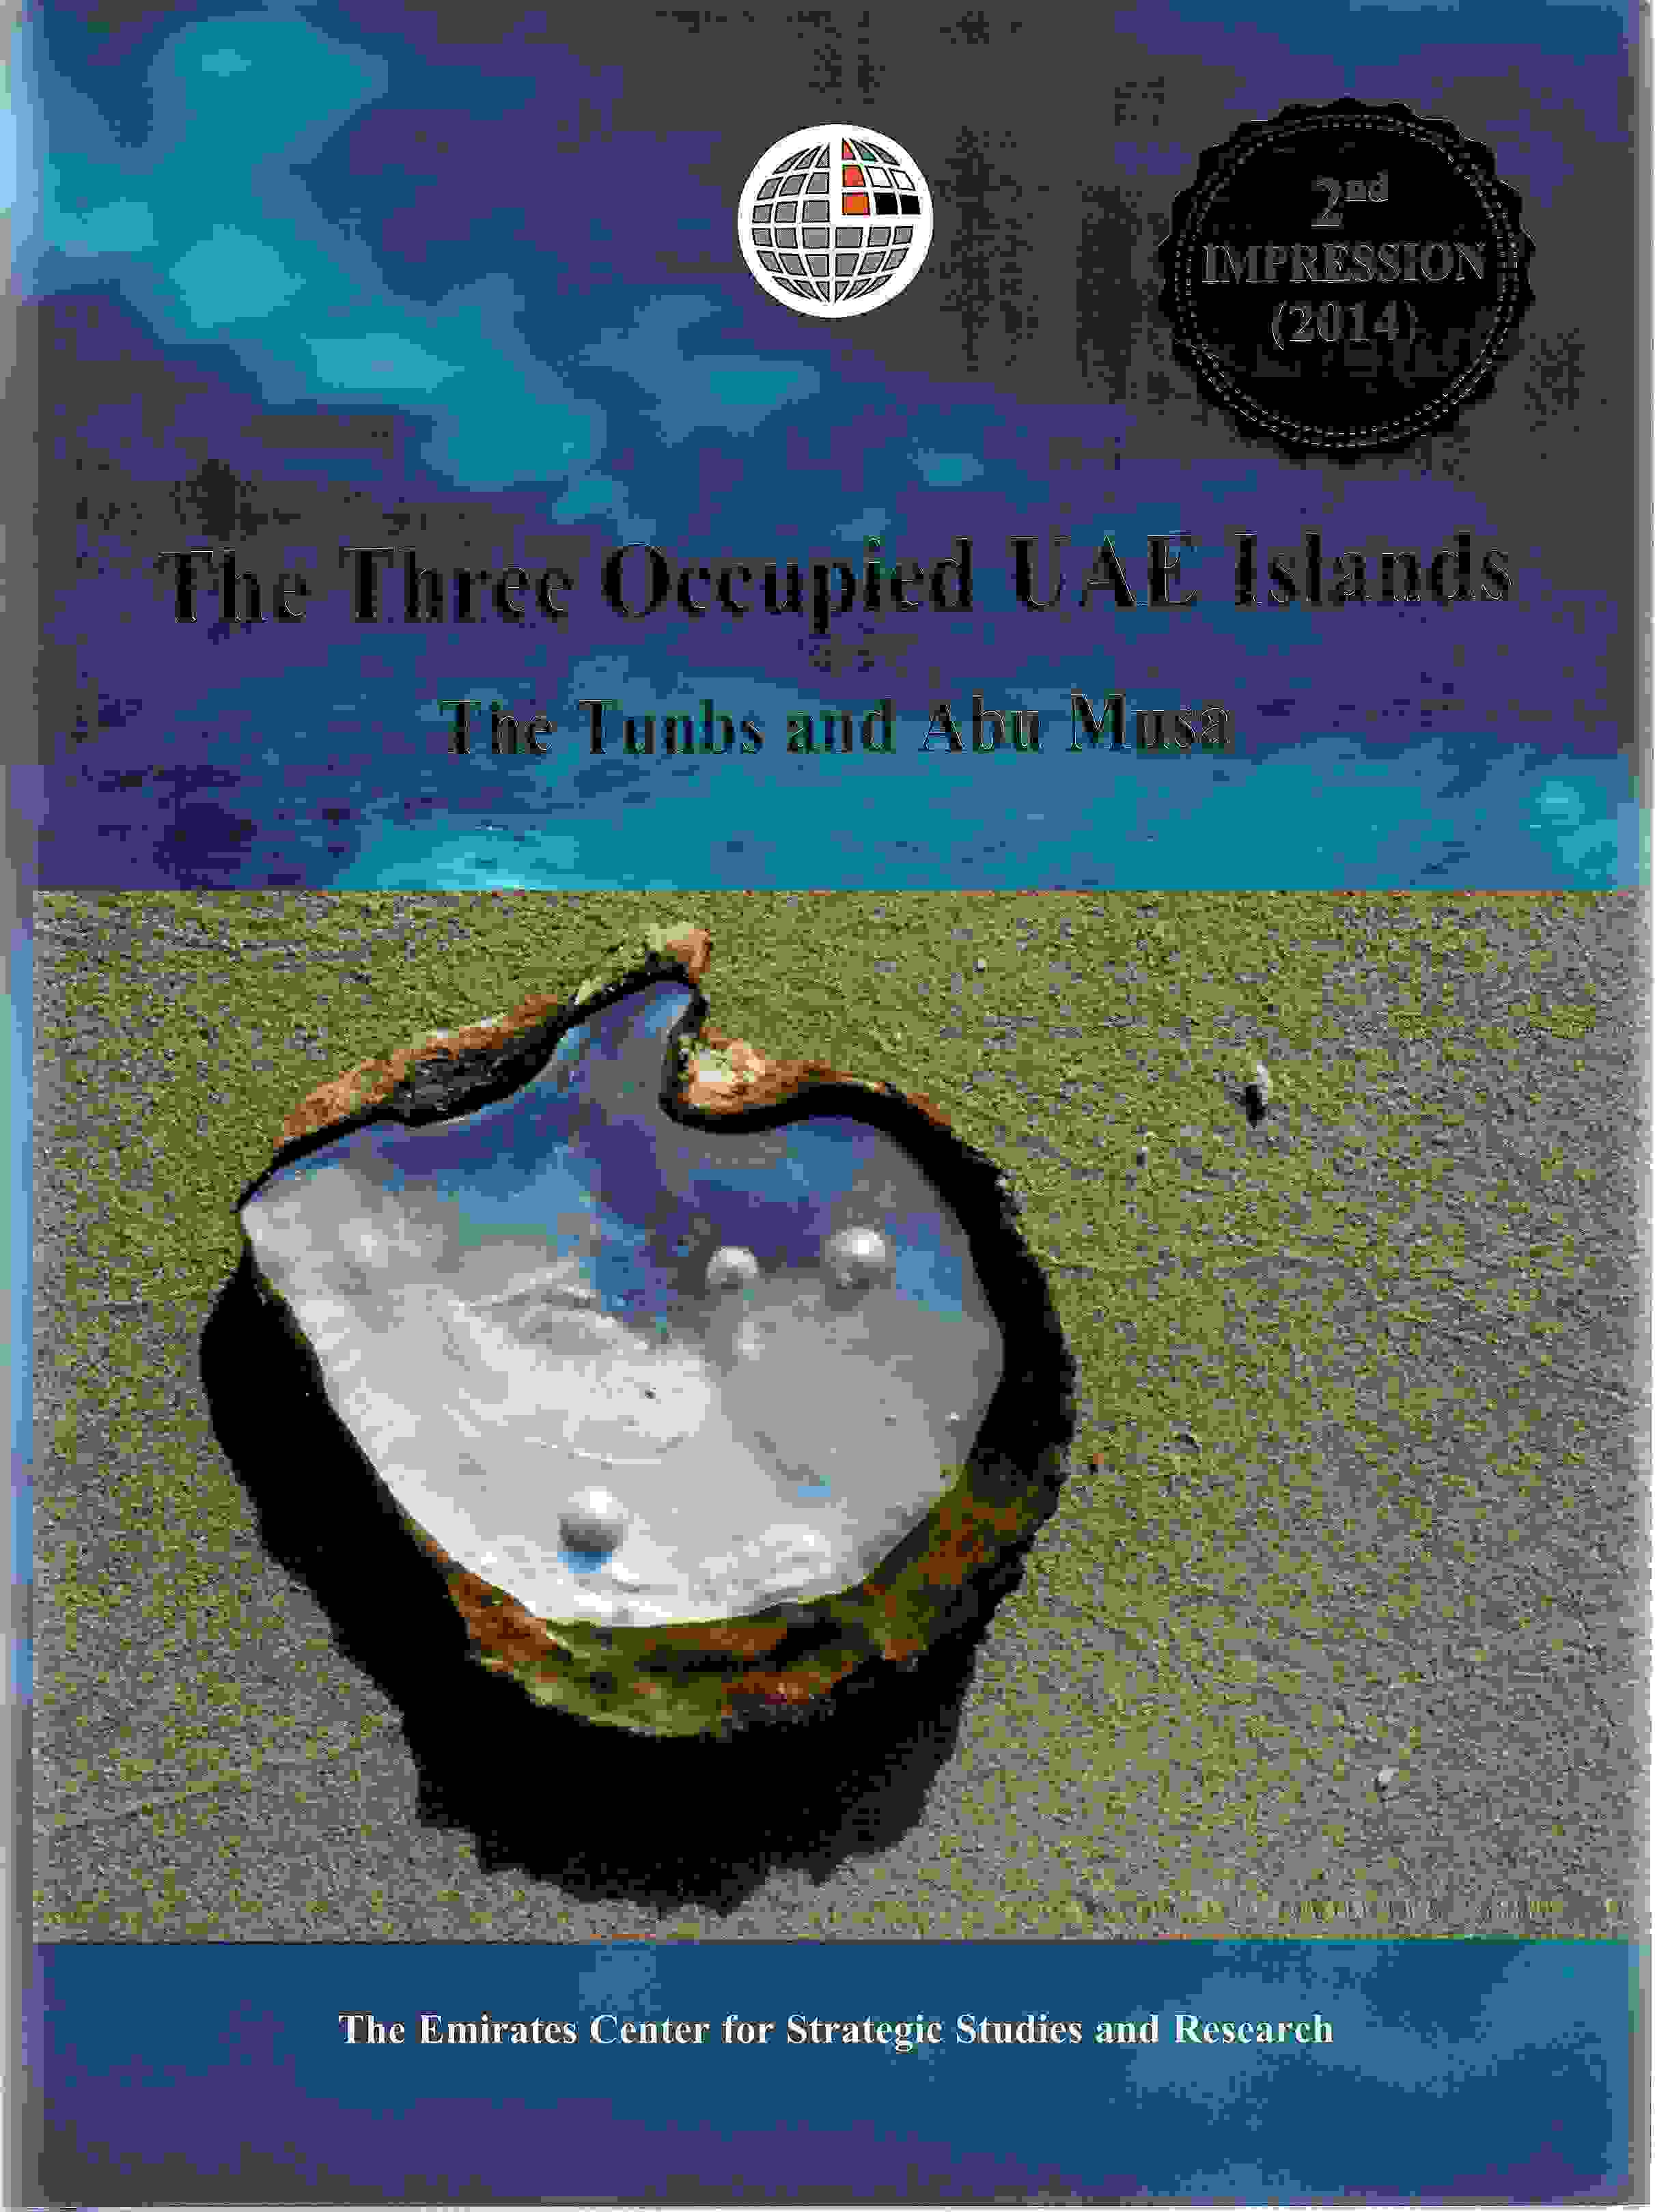 THE THREE OCCUPIED UAE ISLANDS THE TUNBS AND ABU MUSA